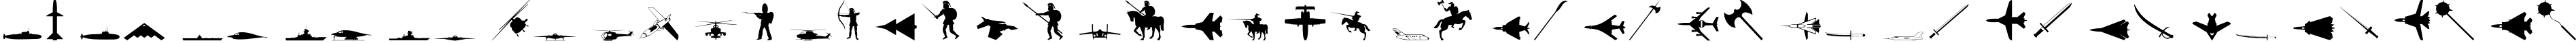 Пример написания английского алфавита шрифтом Military